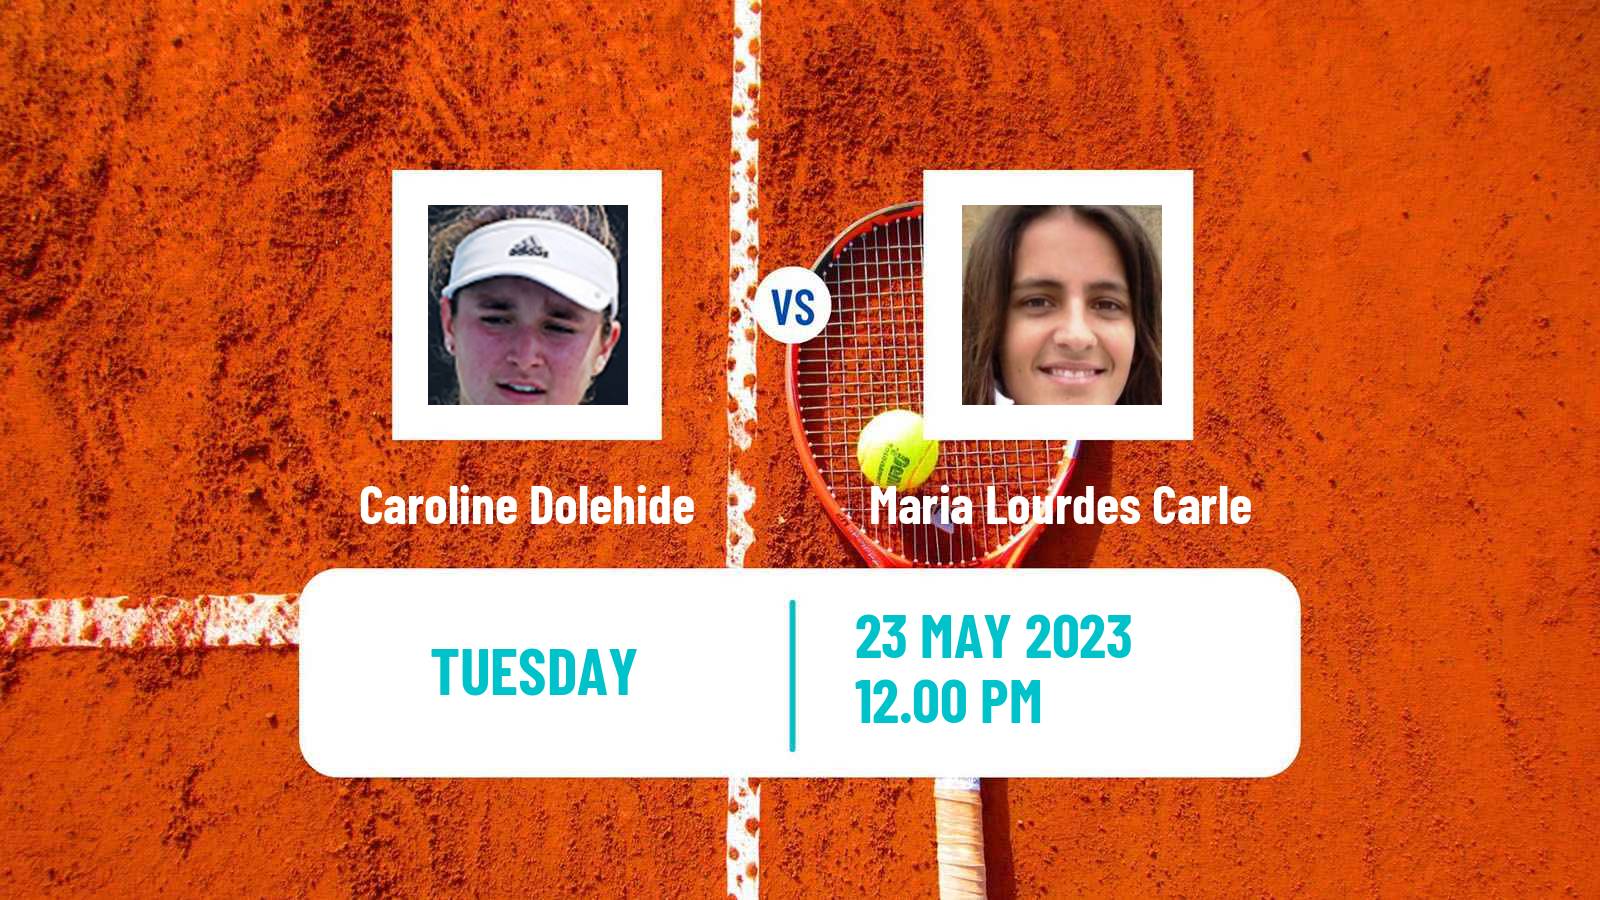 Tennis WTA Roland Garros Caroline Dolehide - Maria Lourdes Carle